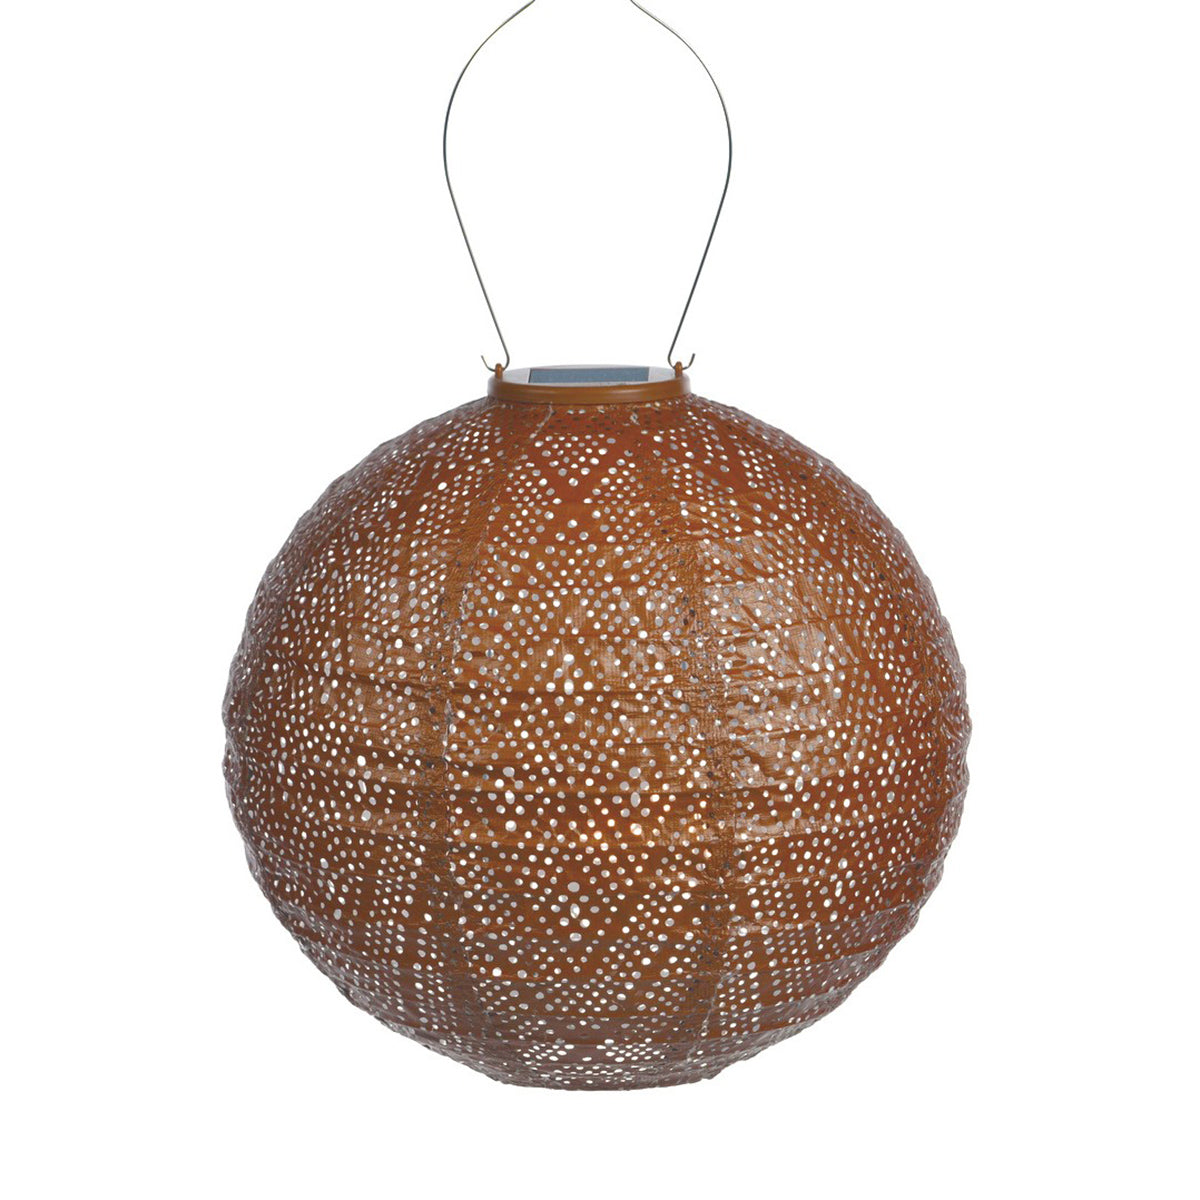 Round Ikat Lantern - Copper